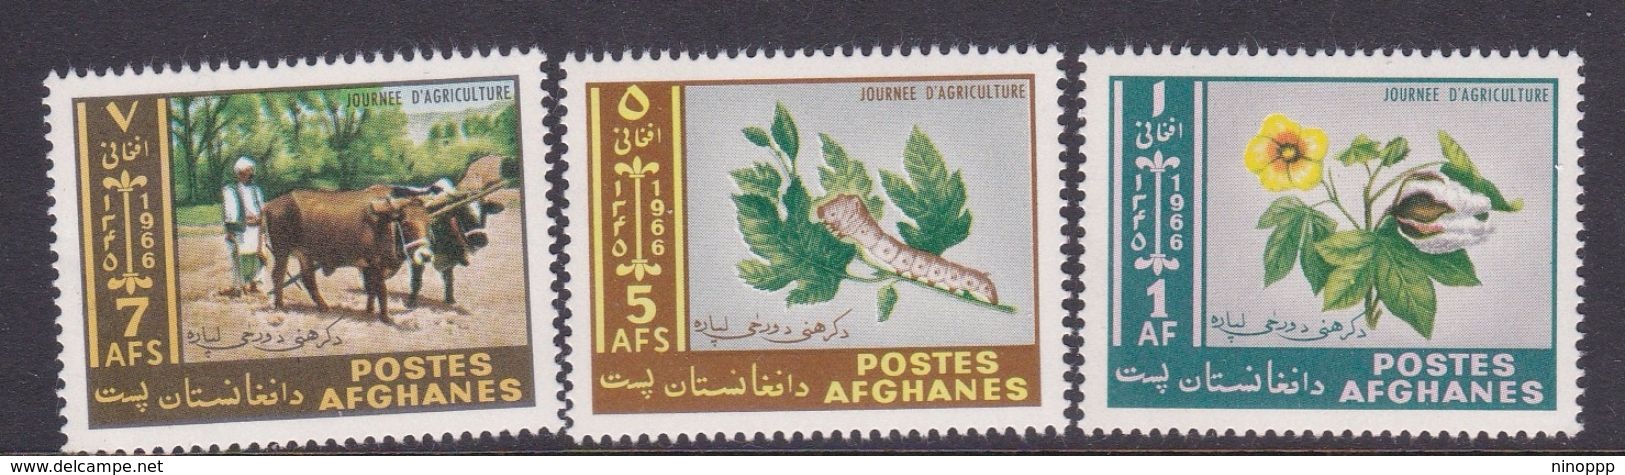 Afghanistan SG 564-566 1966 Agricultural Day MNH - Afghanistan